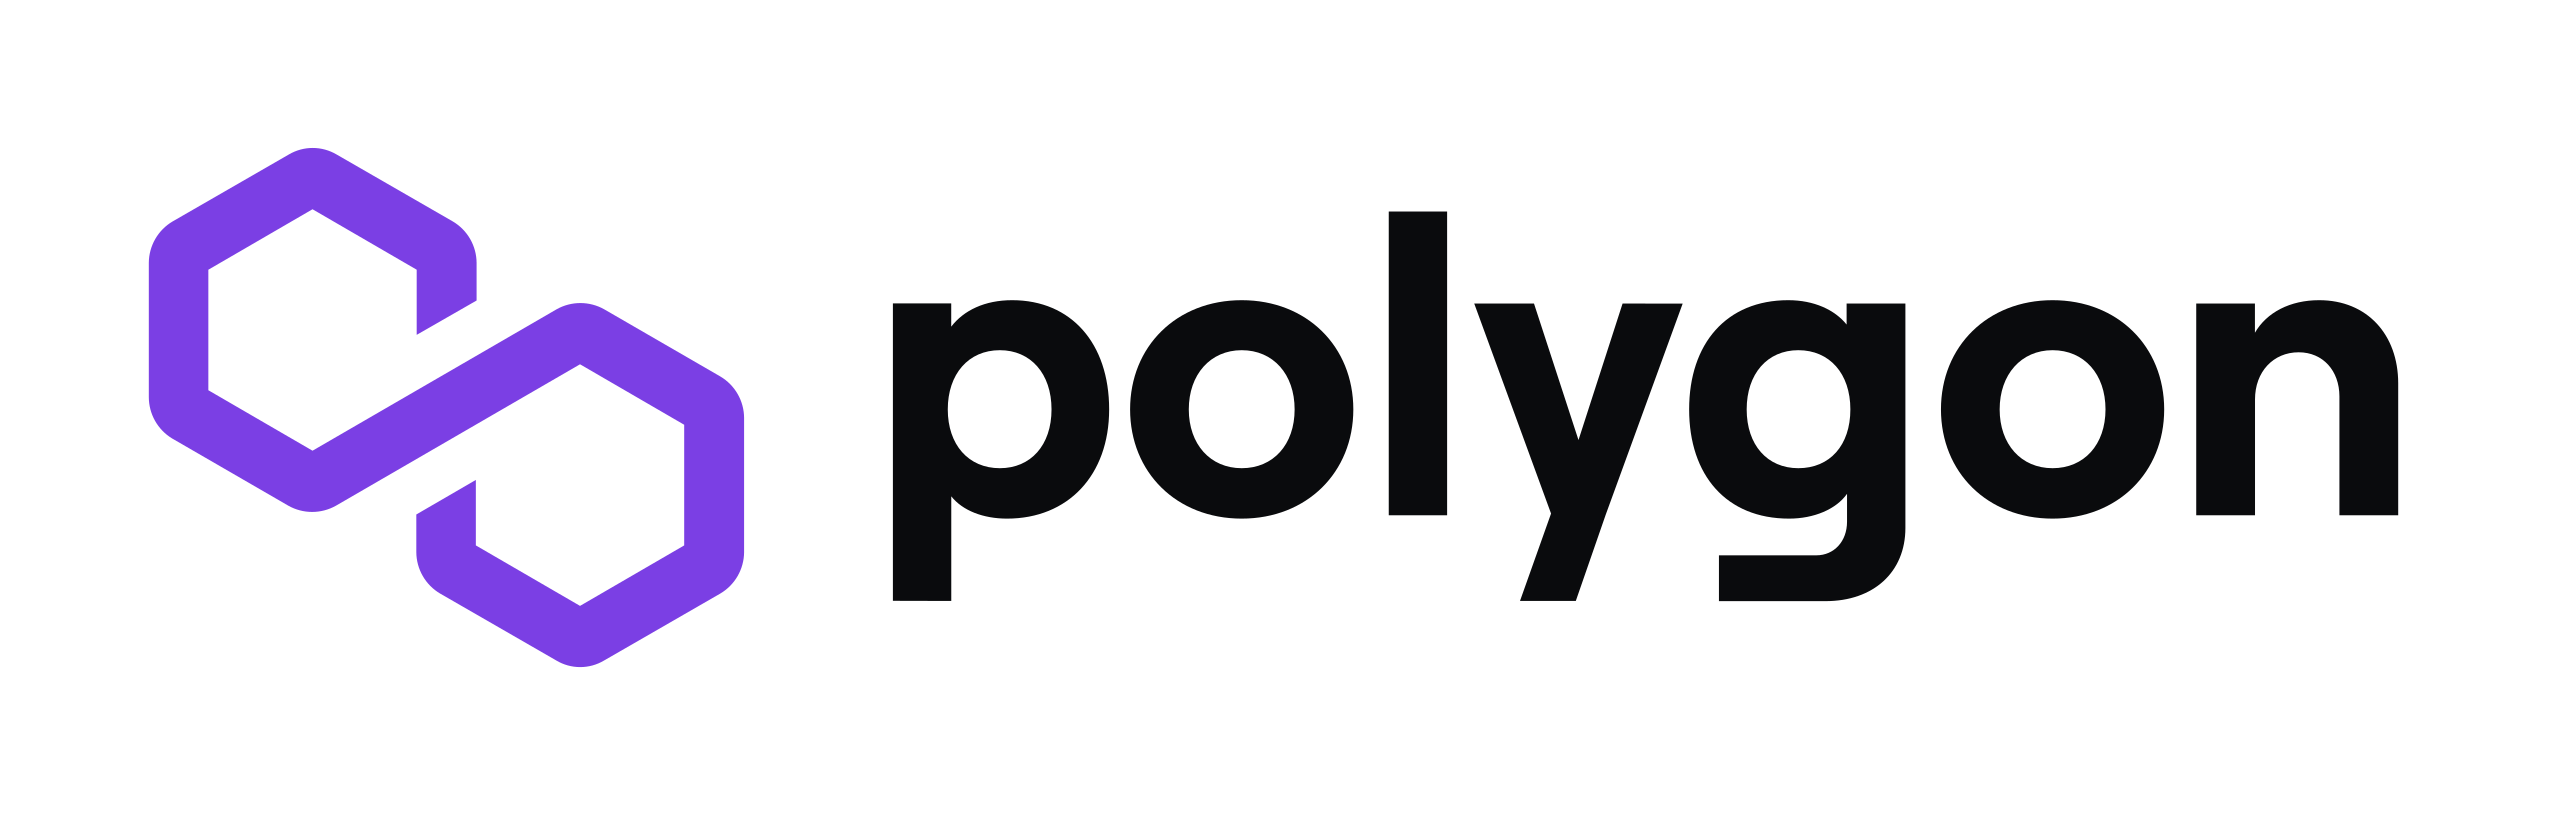 Polygon_blockchain_logo